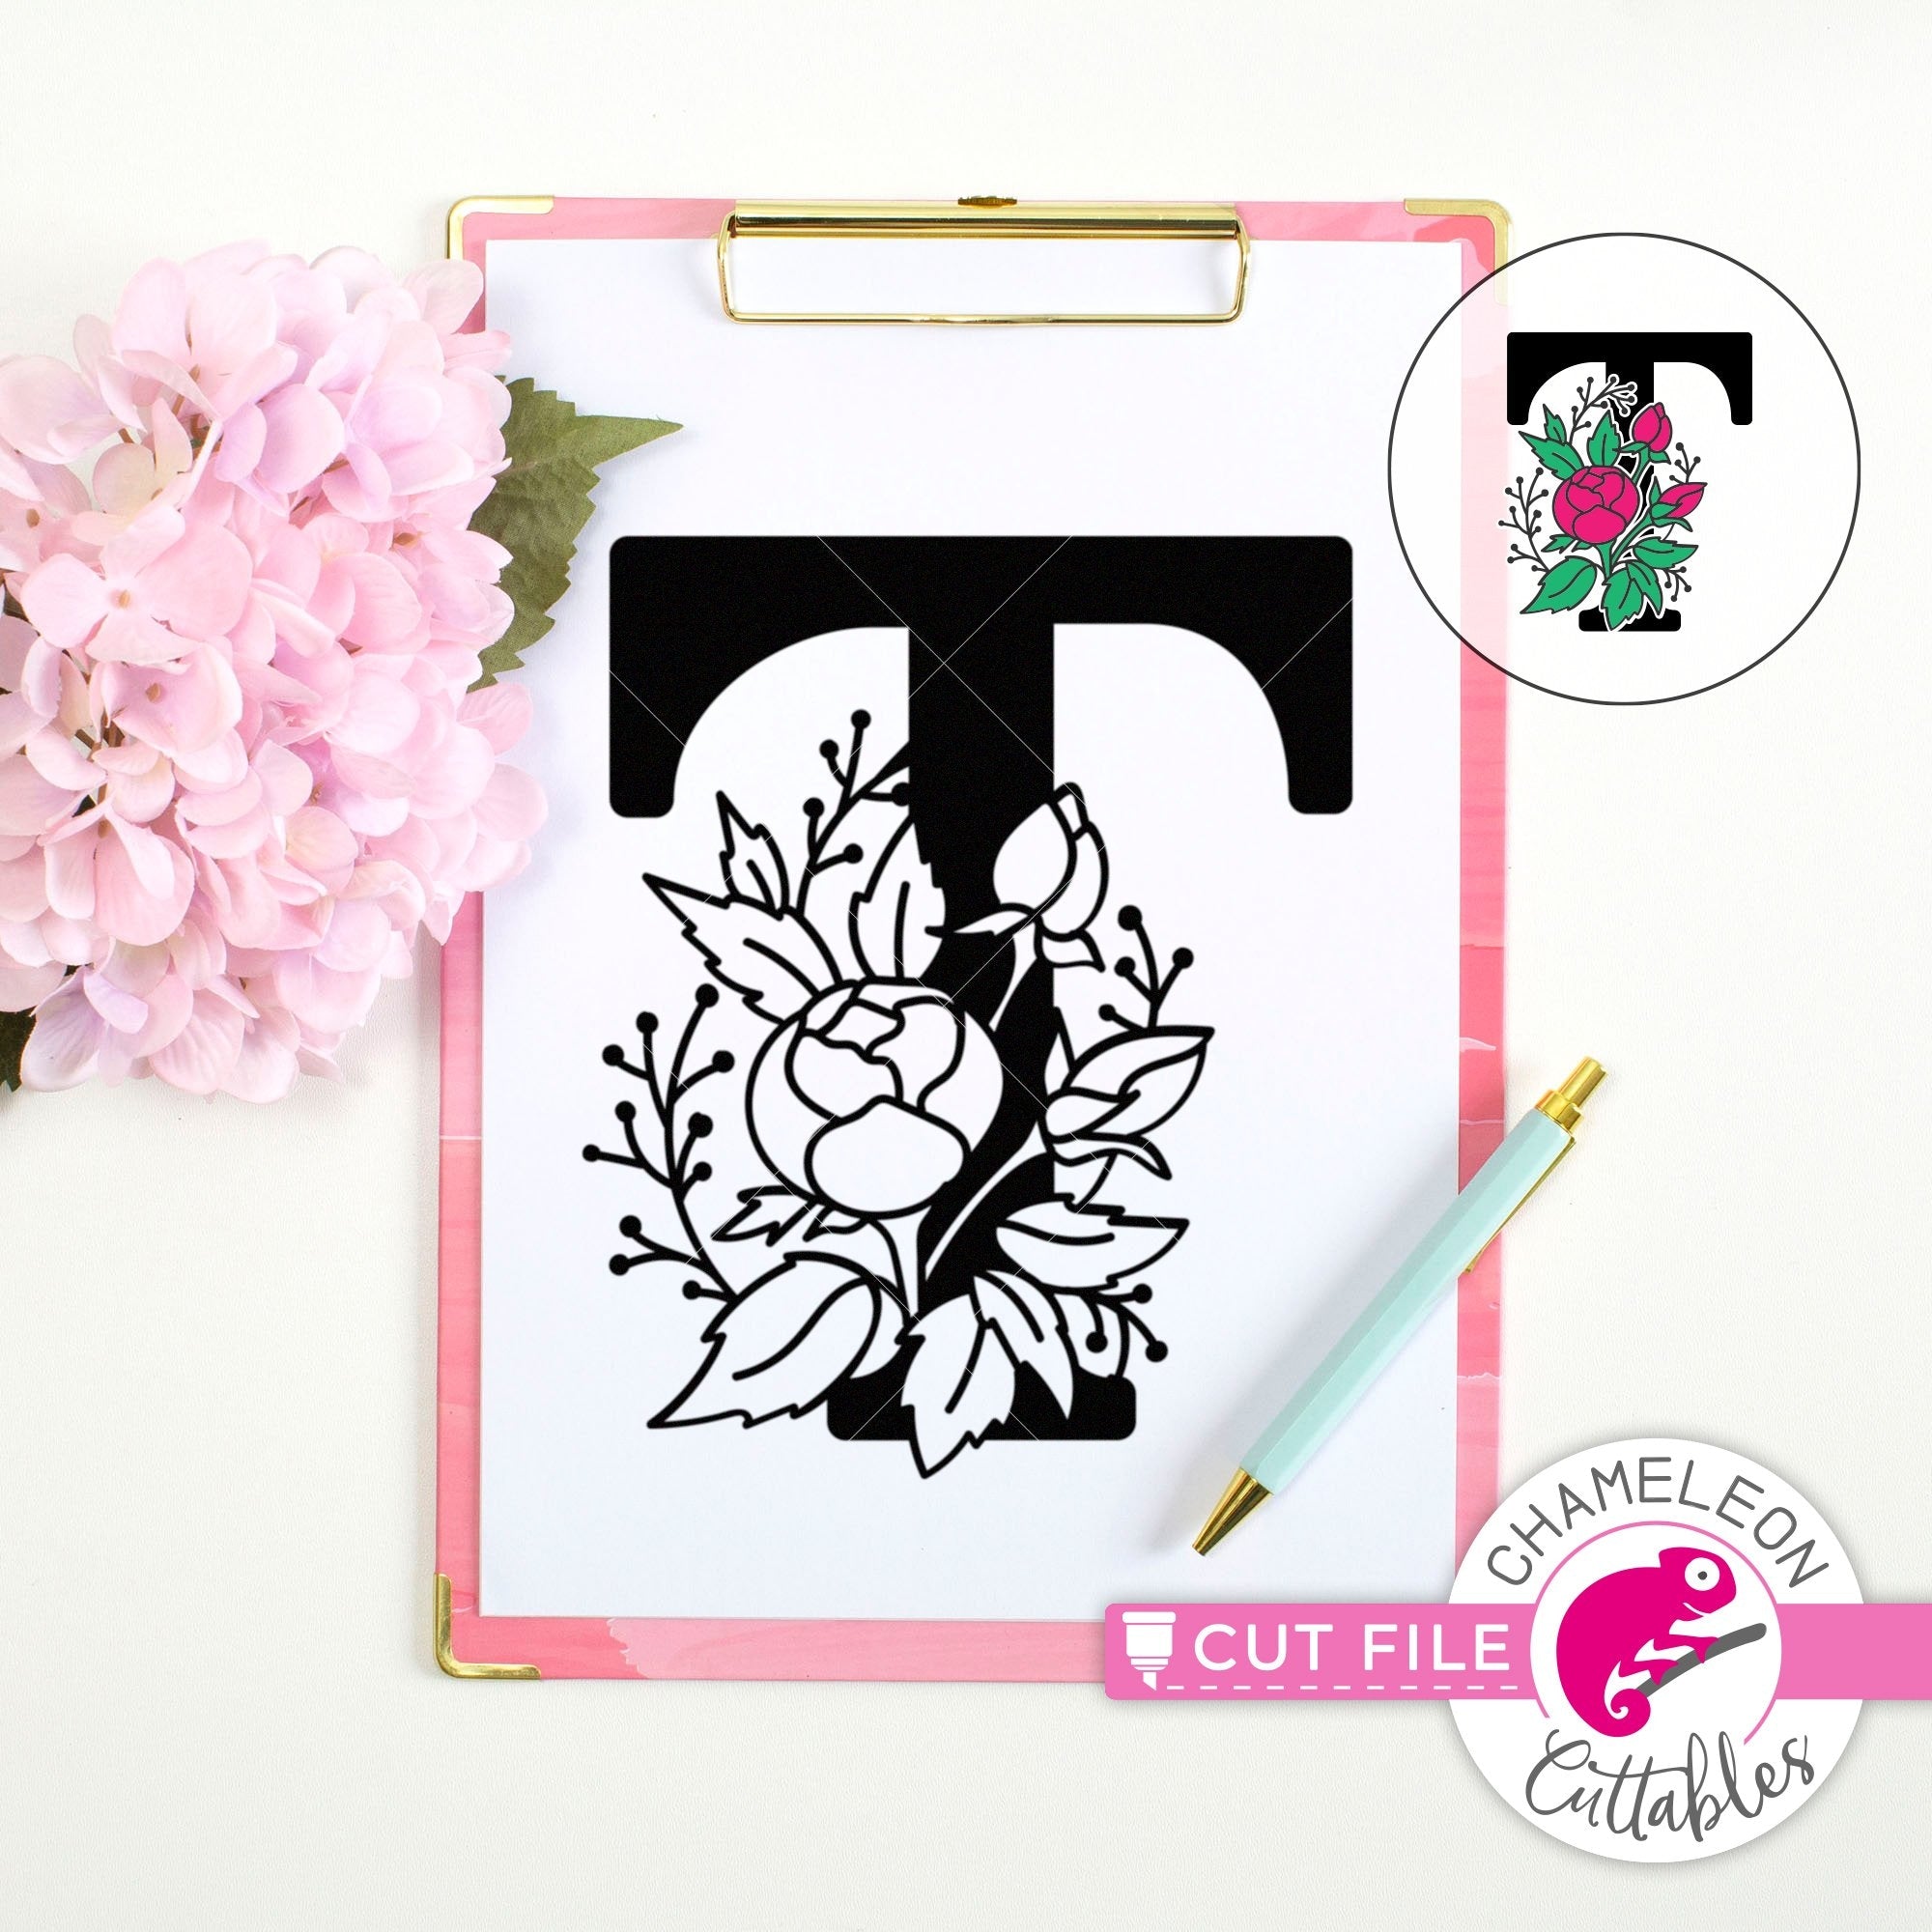 Split Floral Letter Monogram, Personalized Flower Letter L Classic  T-Shirt for Sale by BeeMeCreative